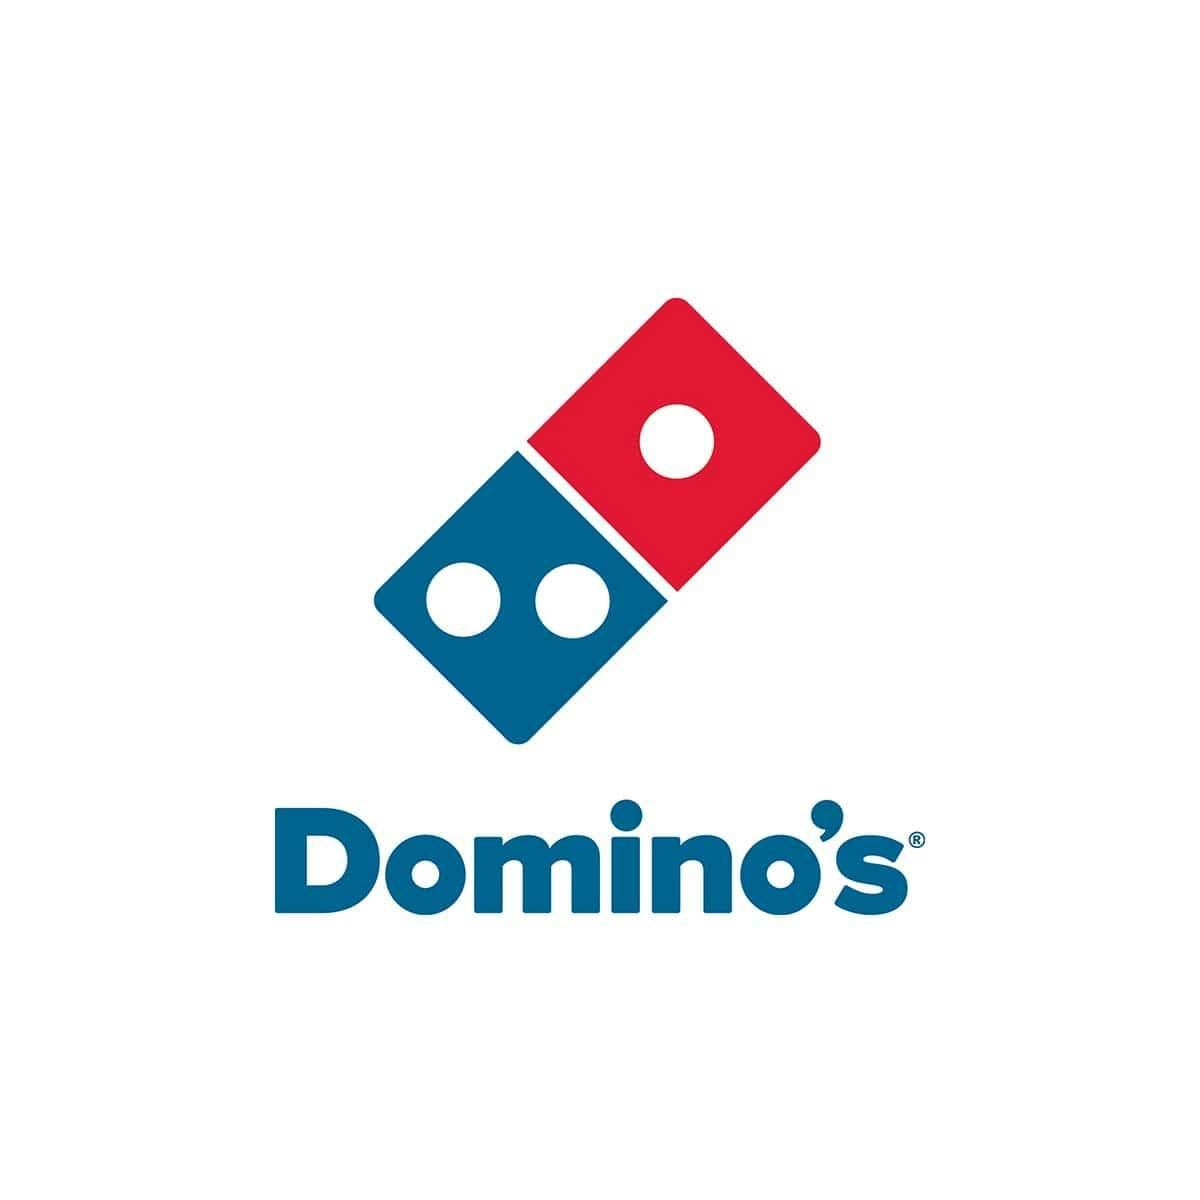  domino's pizza brand logo design